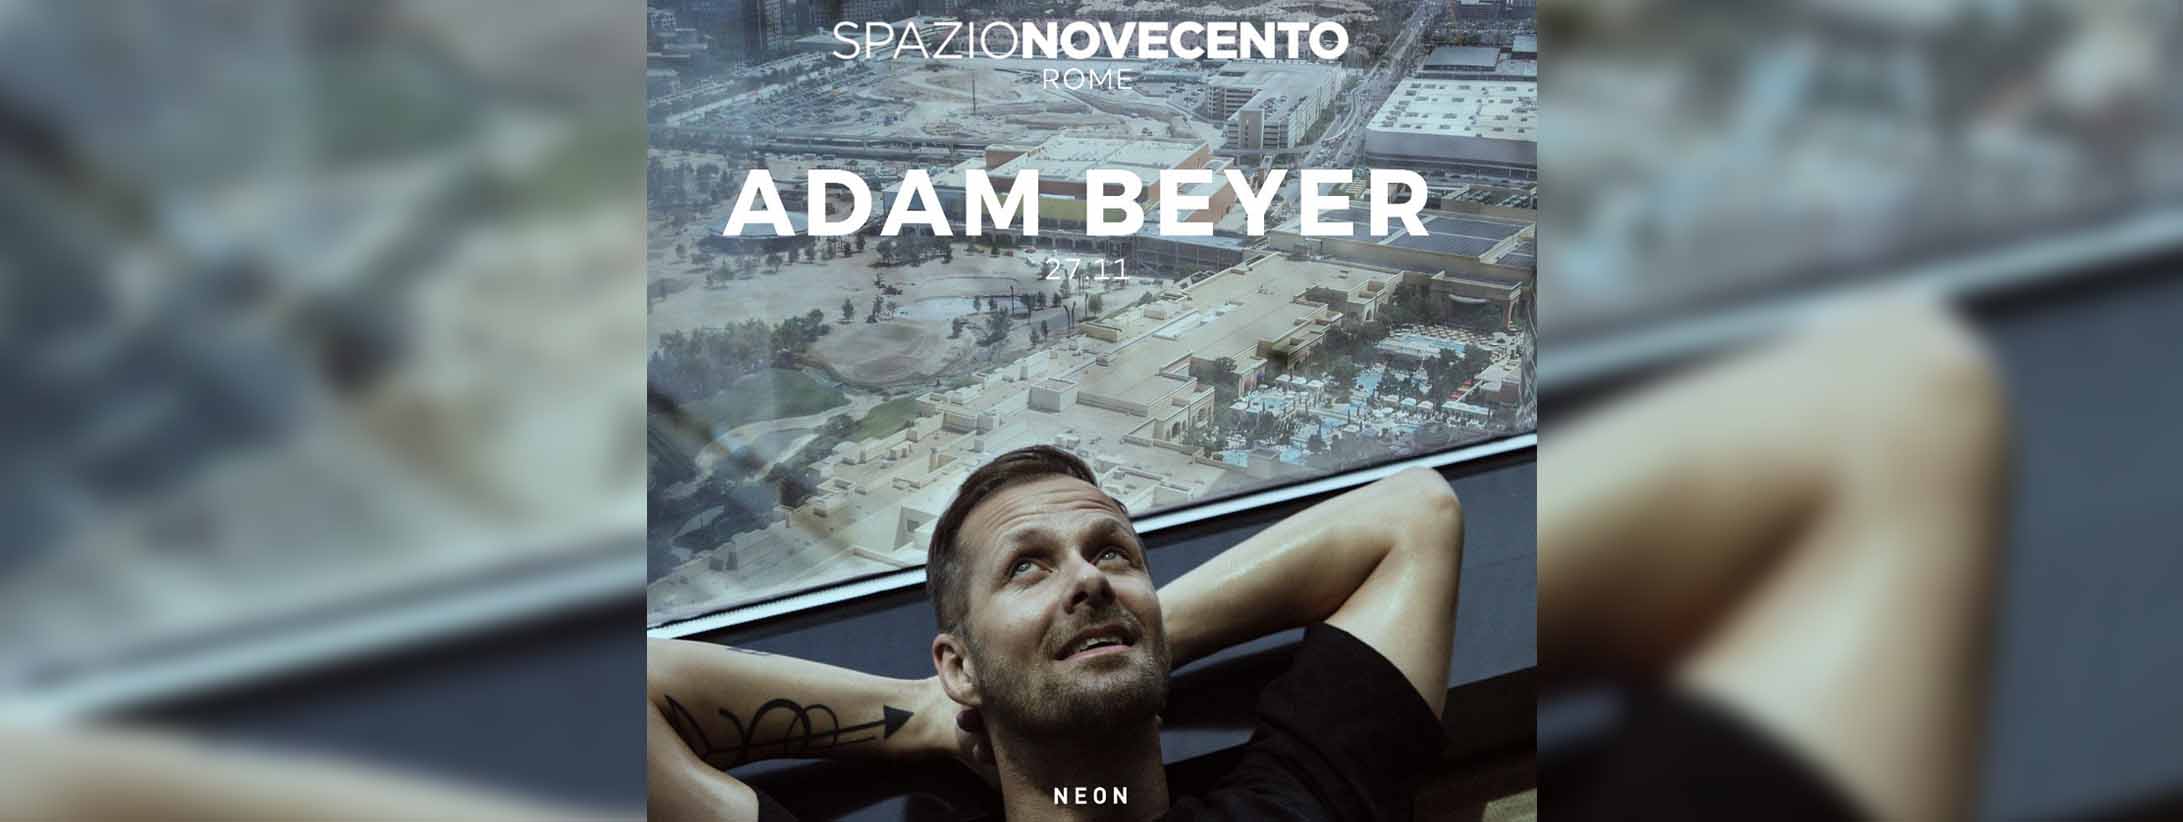 Adam Beyer Spazio Novecento 27 Novembre 2021